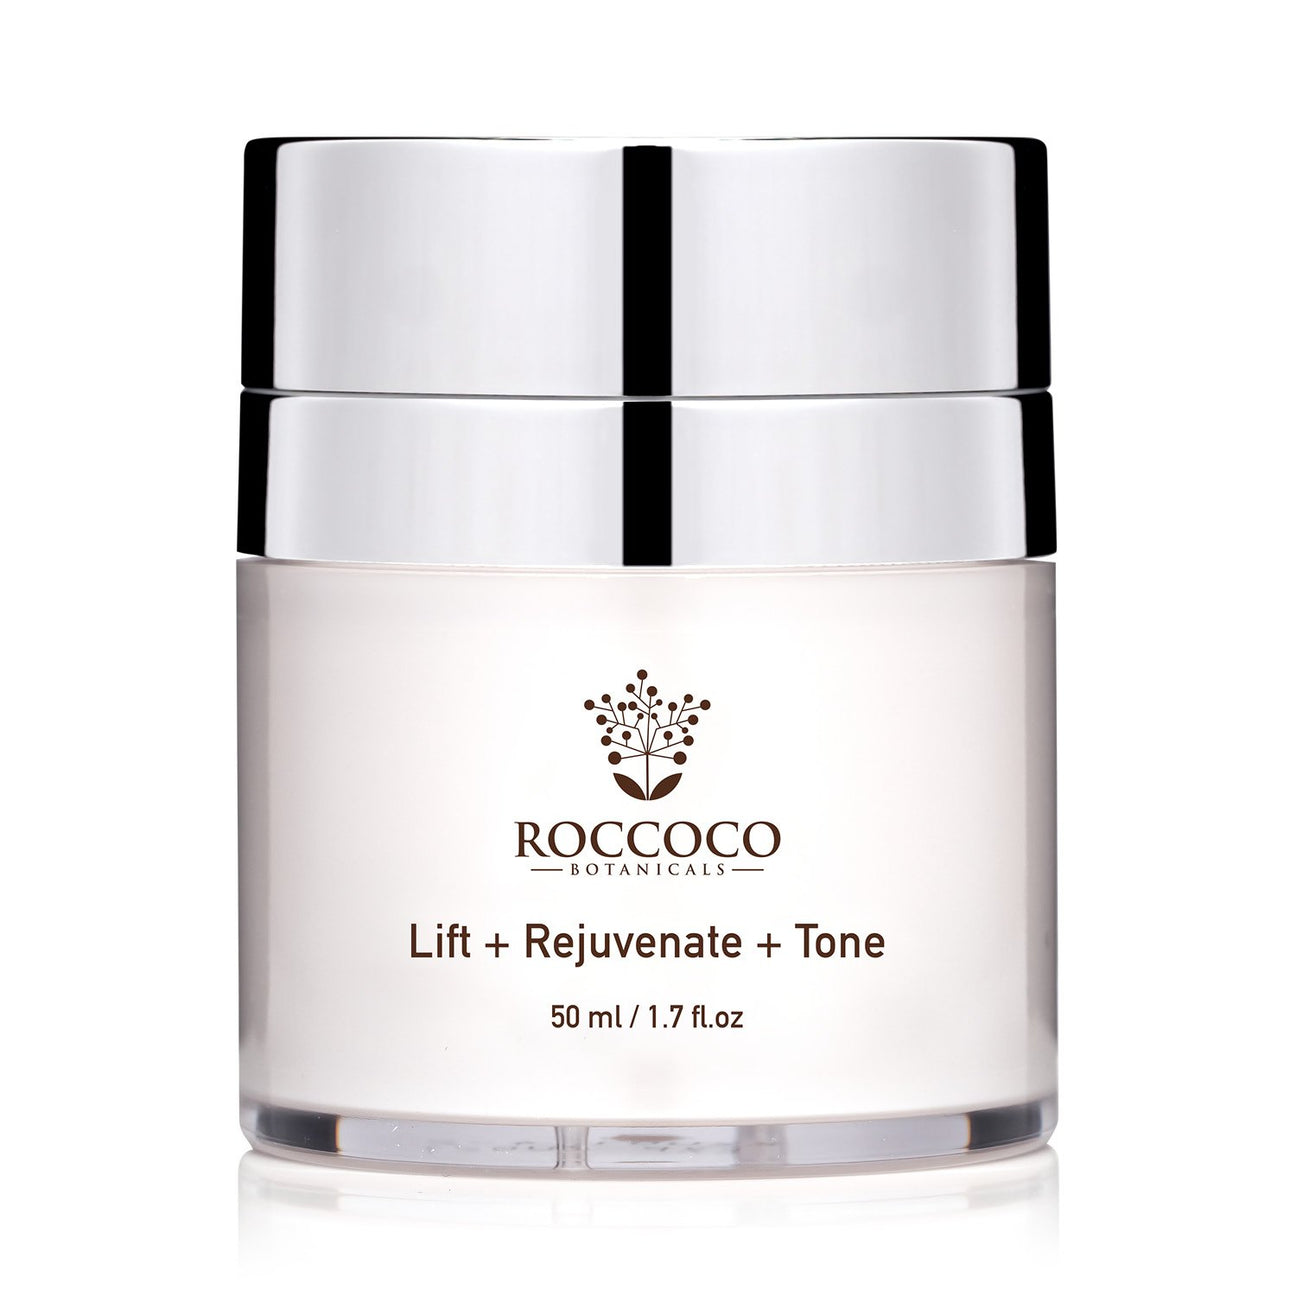 Roccoco Botanicals Lift + Rejuvenate + Tone - Click to Buy!